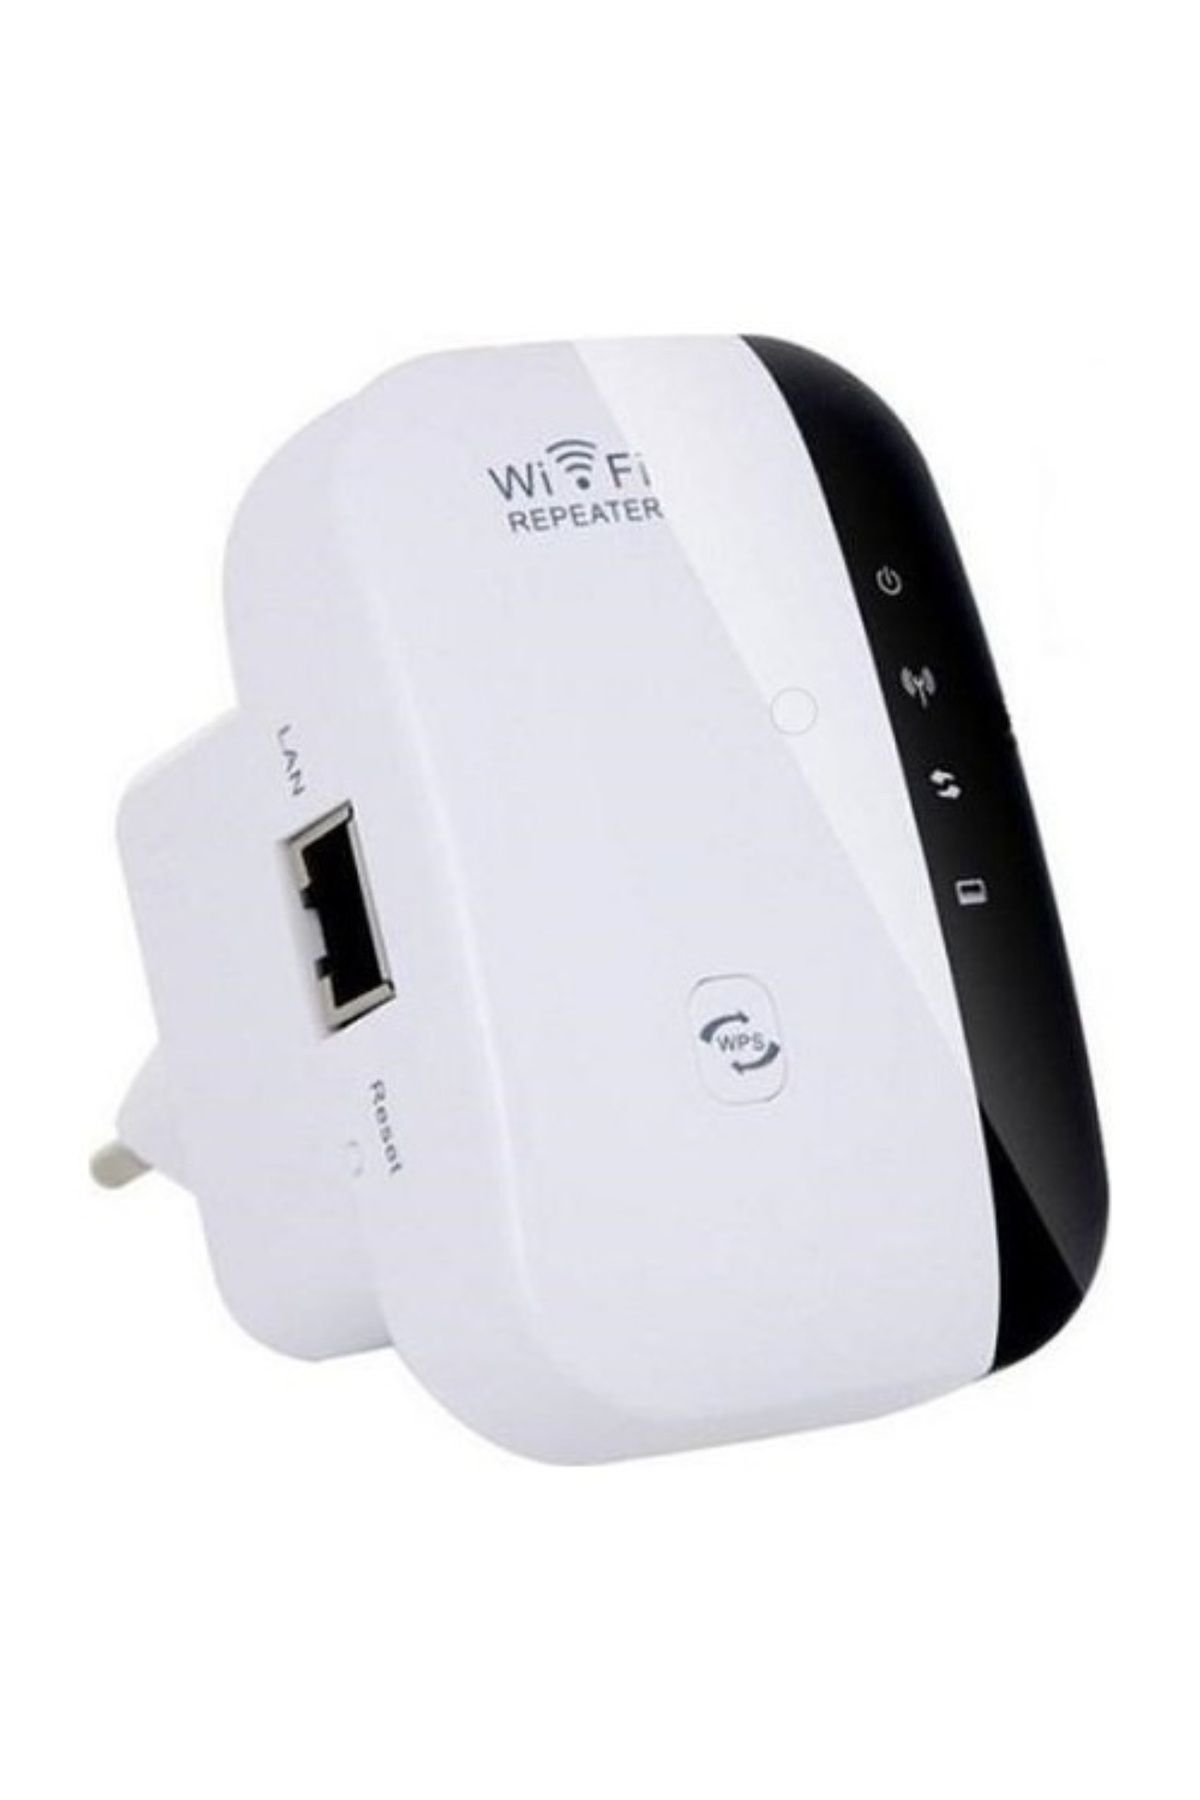 Gomax Wifi Repeater Kablosuz Sinyal Güçlendirici Access Point